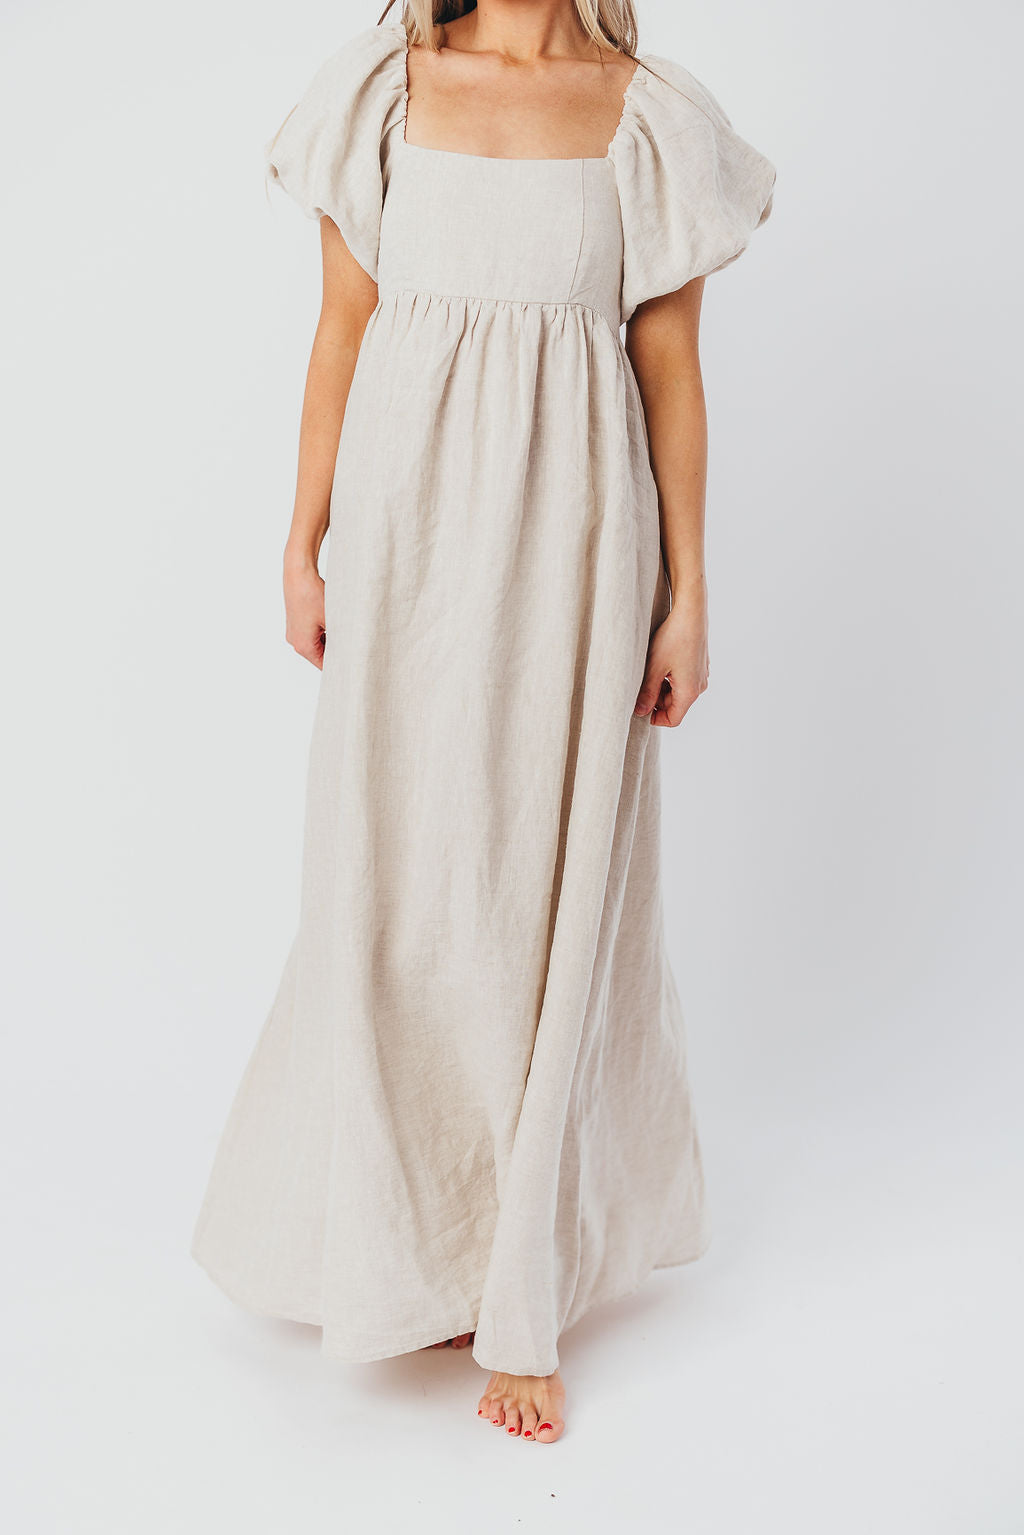 Candace Maxi Dress in Natural - 100% Linen - Bump Friendly